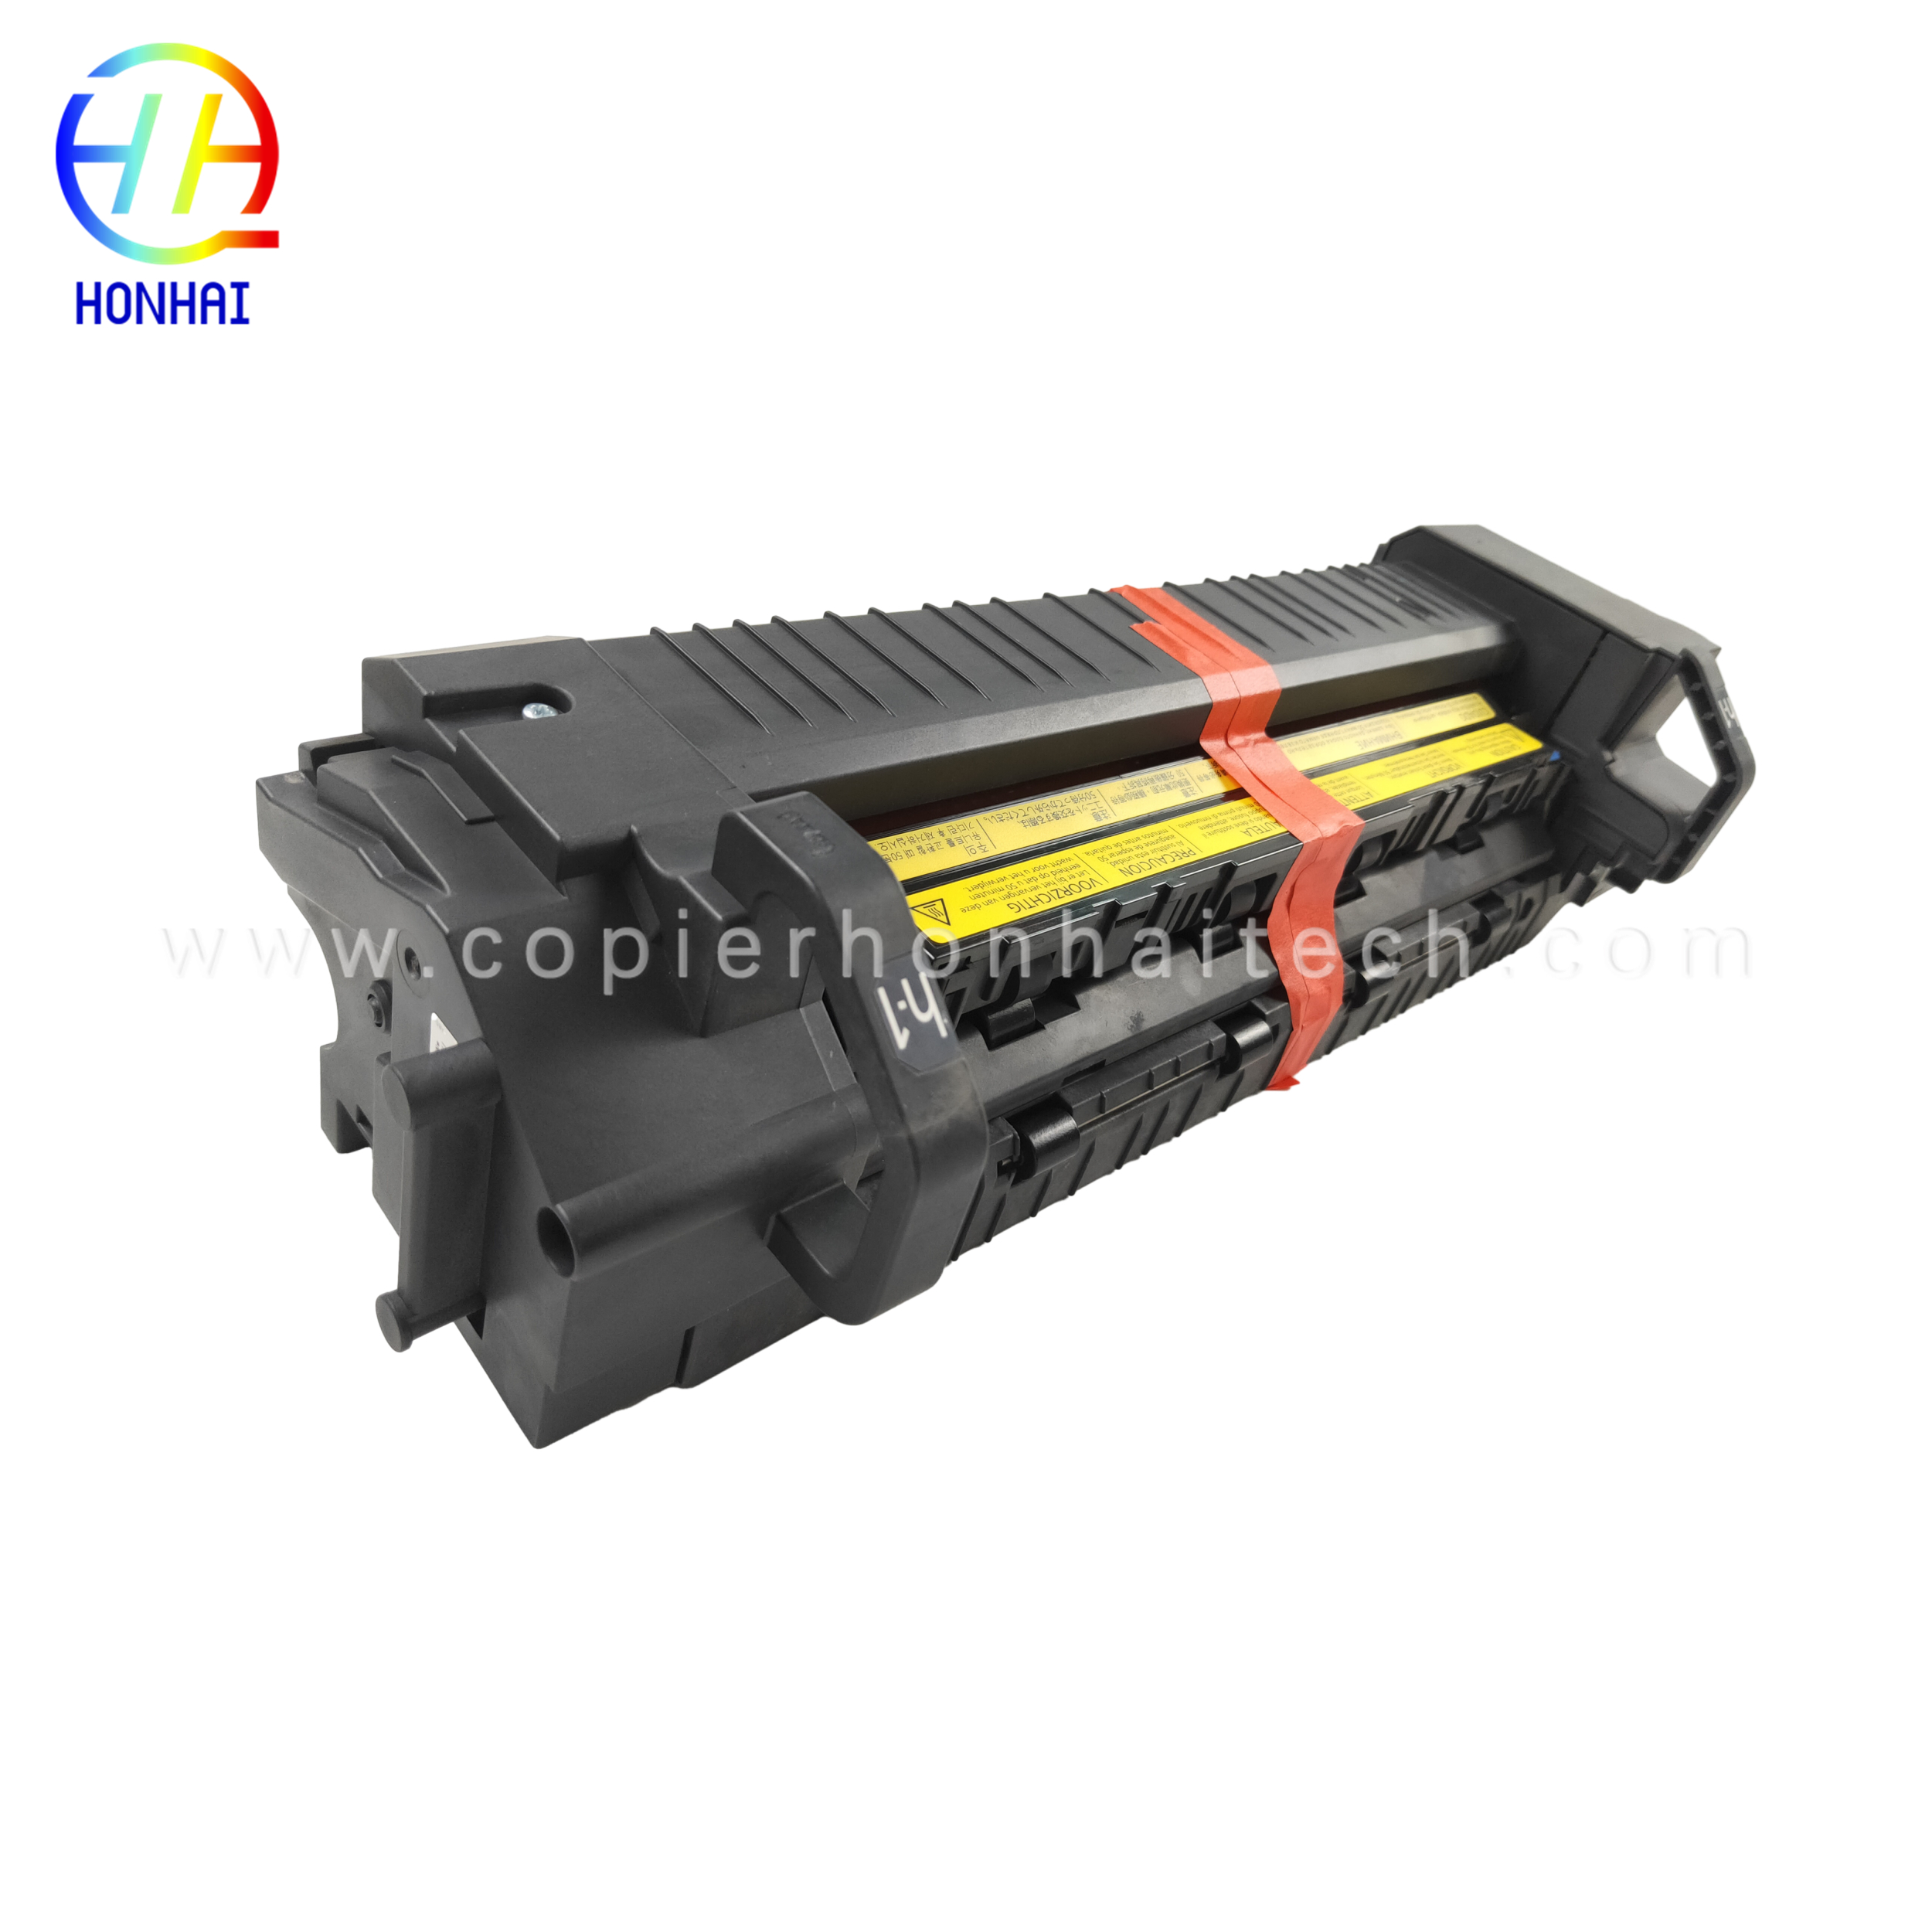 https://www.copierhonhaitech.com/fuser-unit-220v-kuri-kyocera-taskalfa-2551-302np93080-fk-8325-fuser-kit-product/